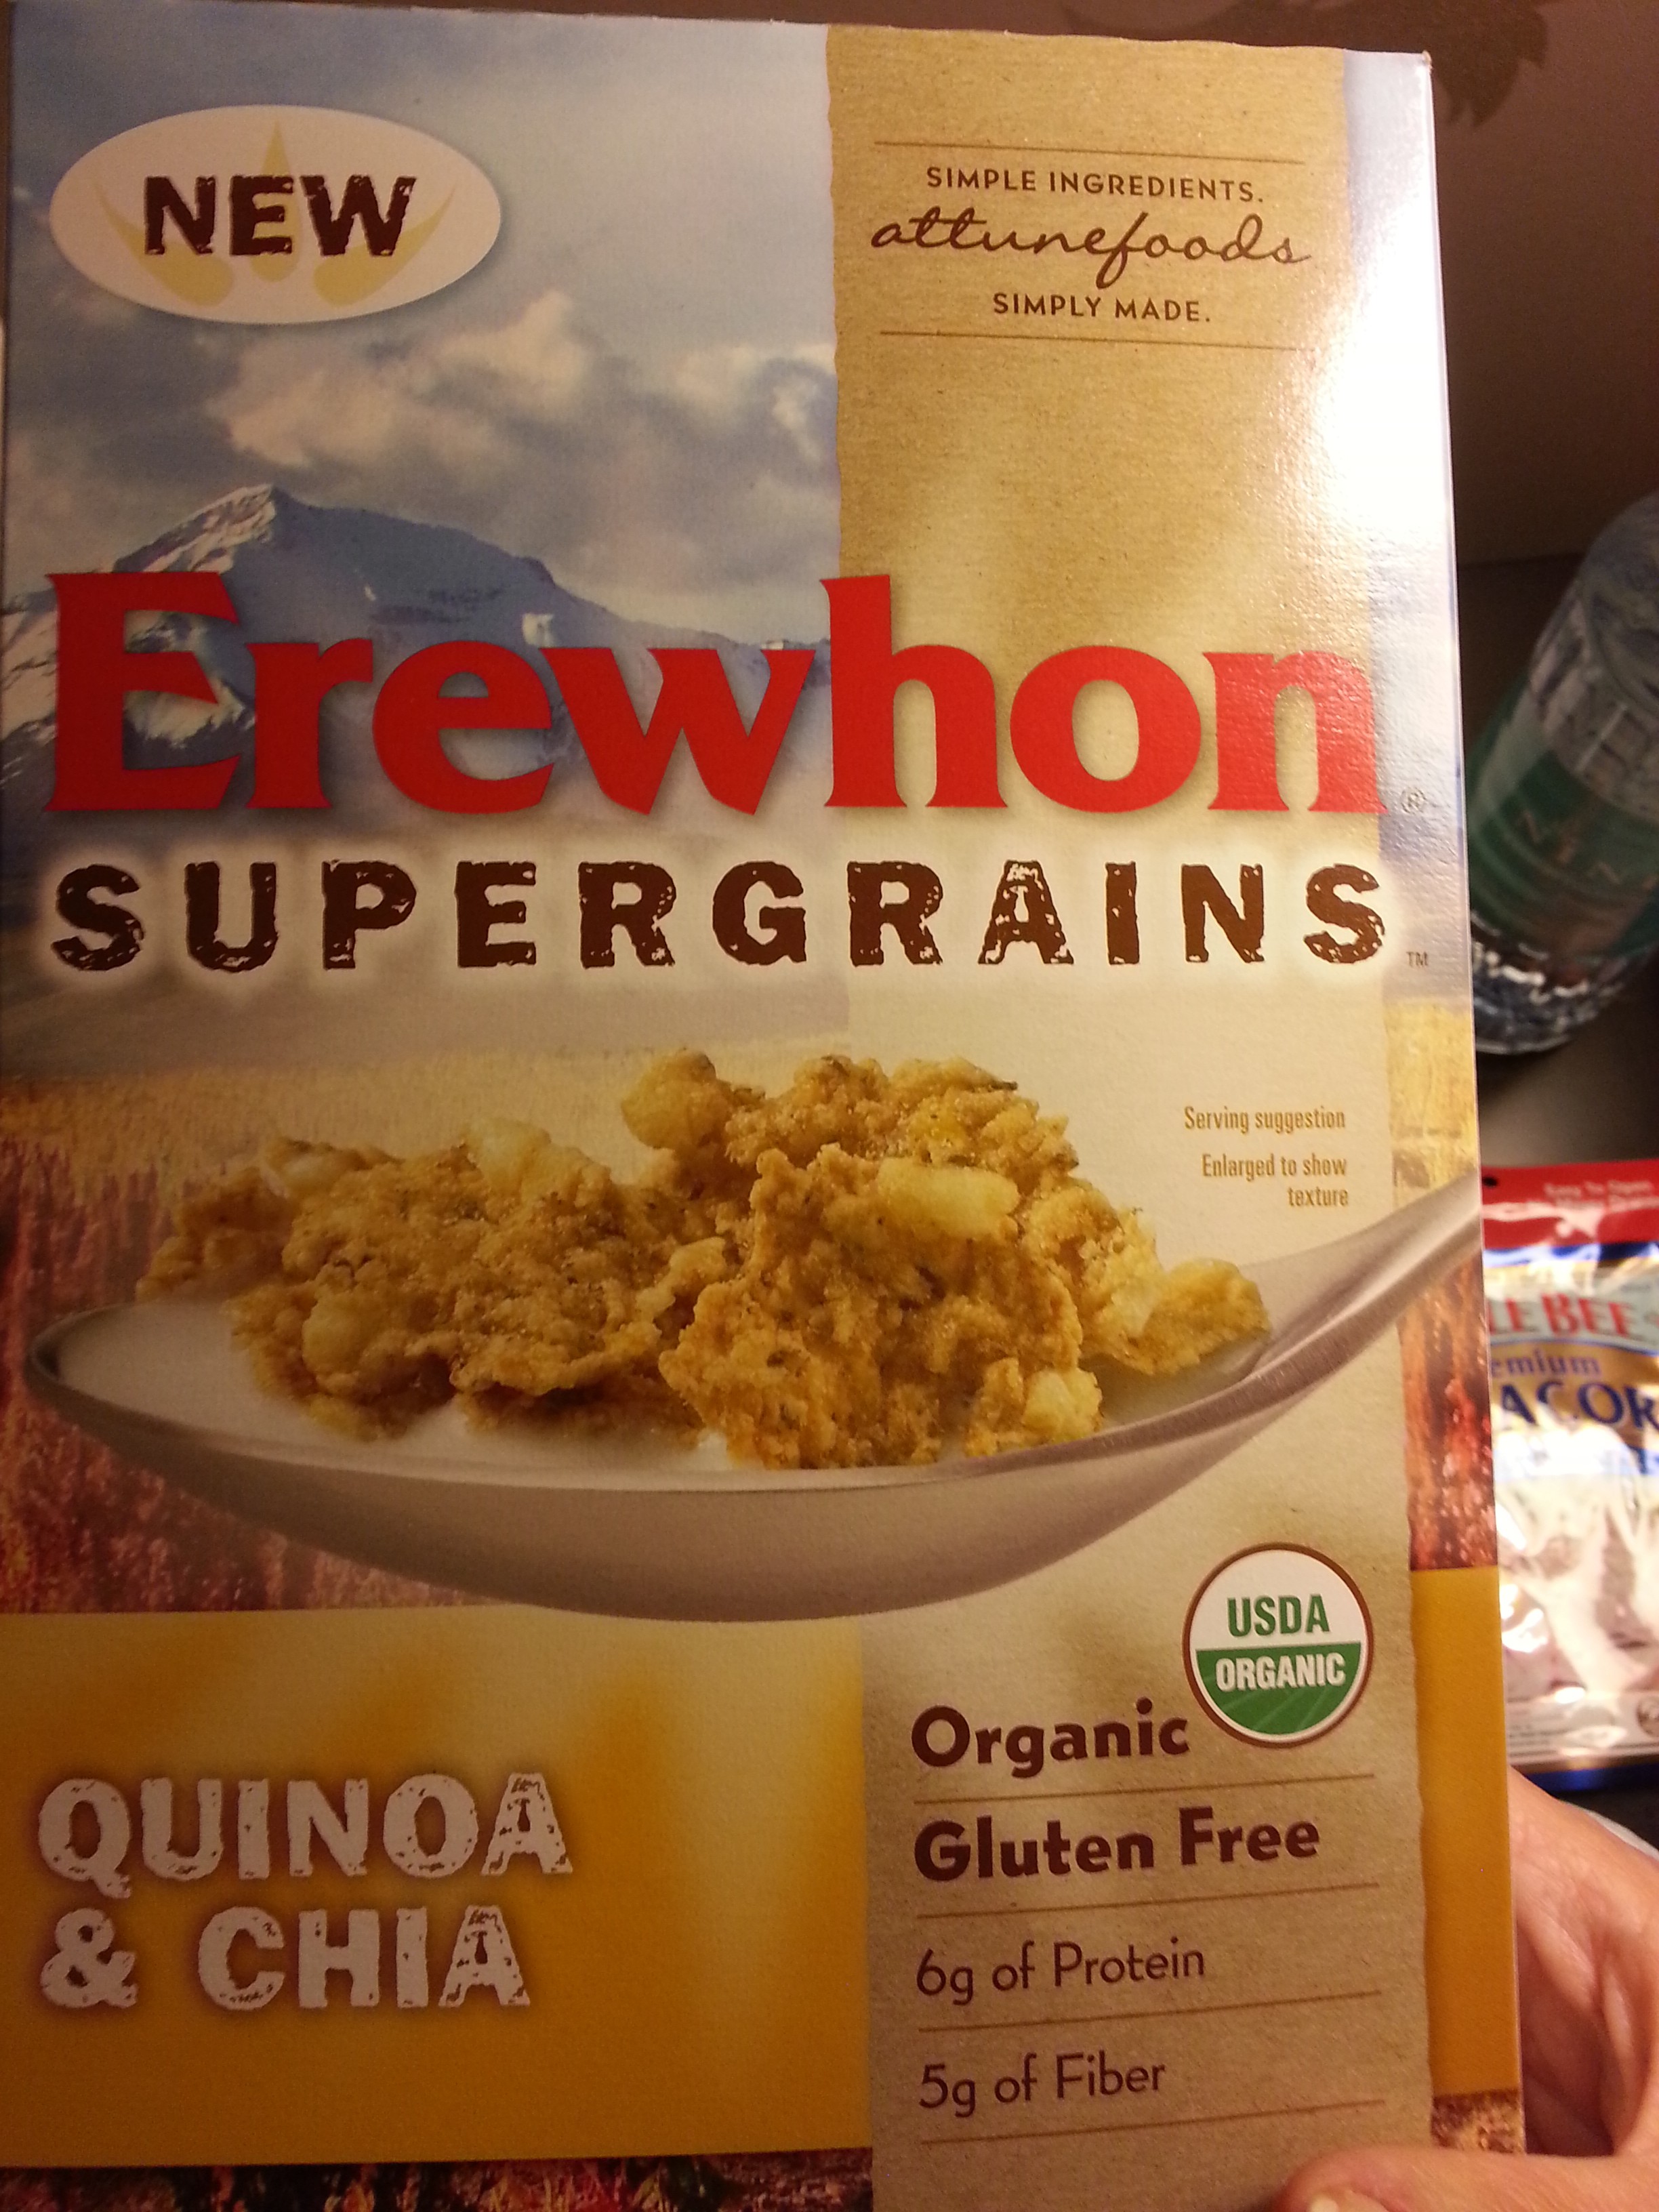 Erewhon quinoa and chia cereal